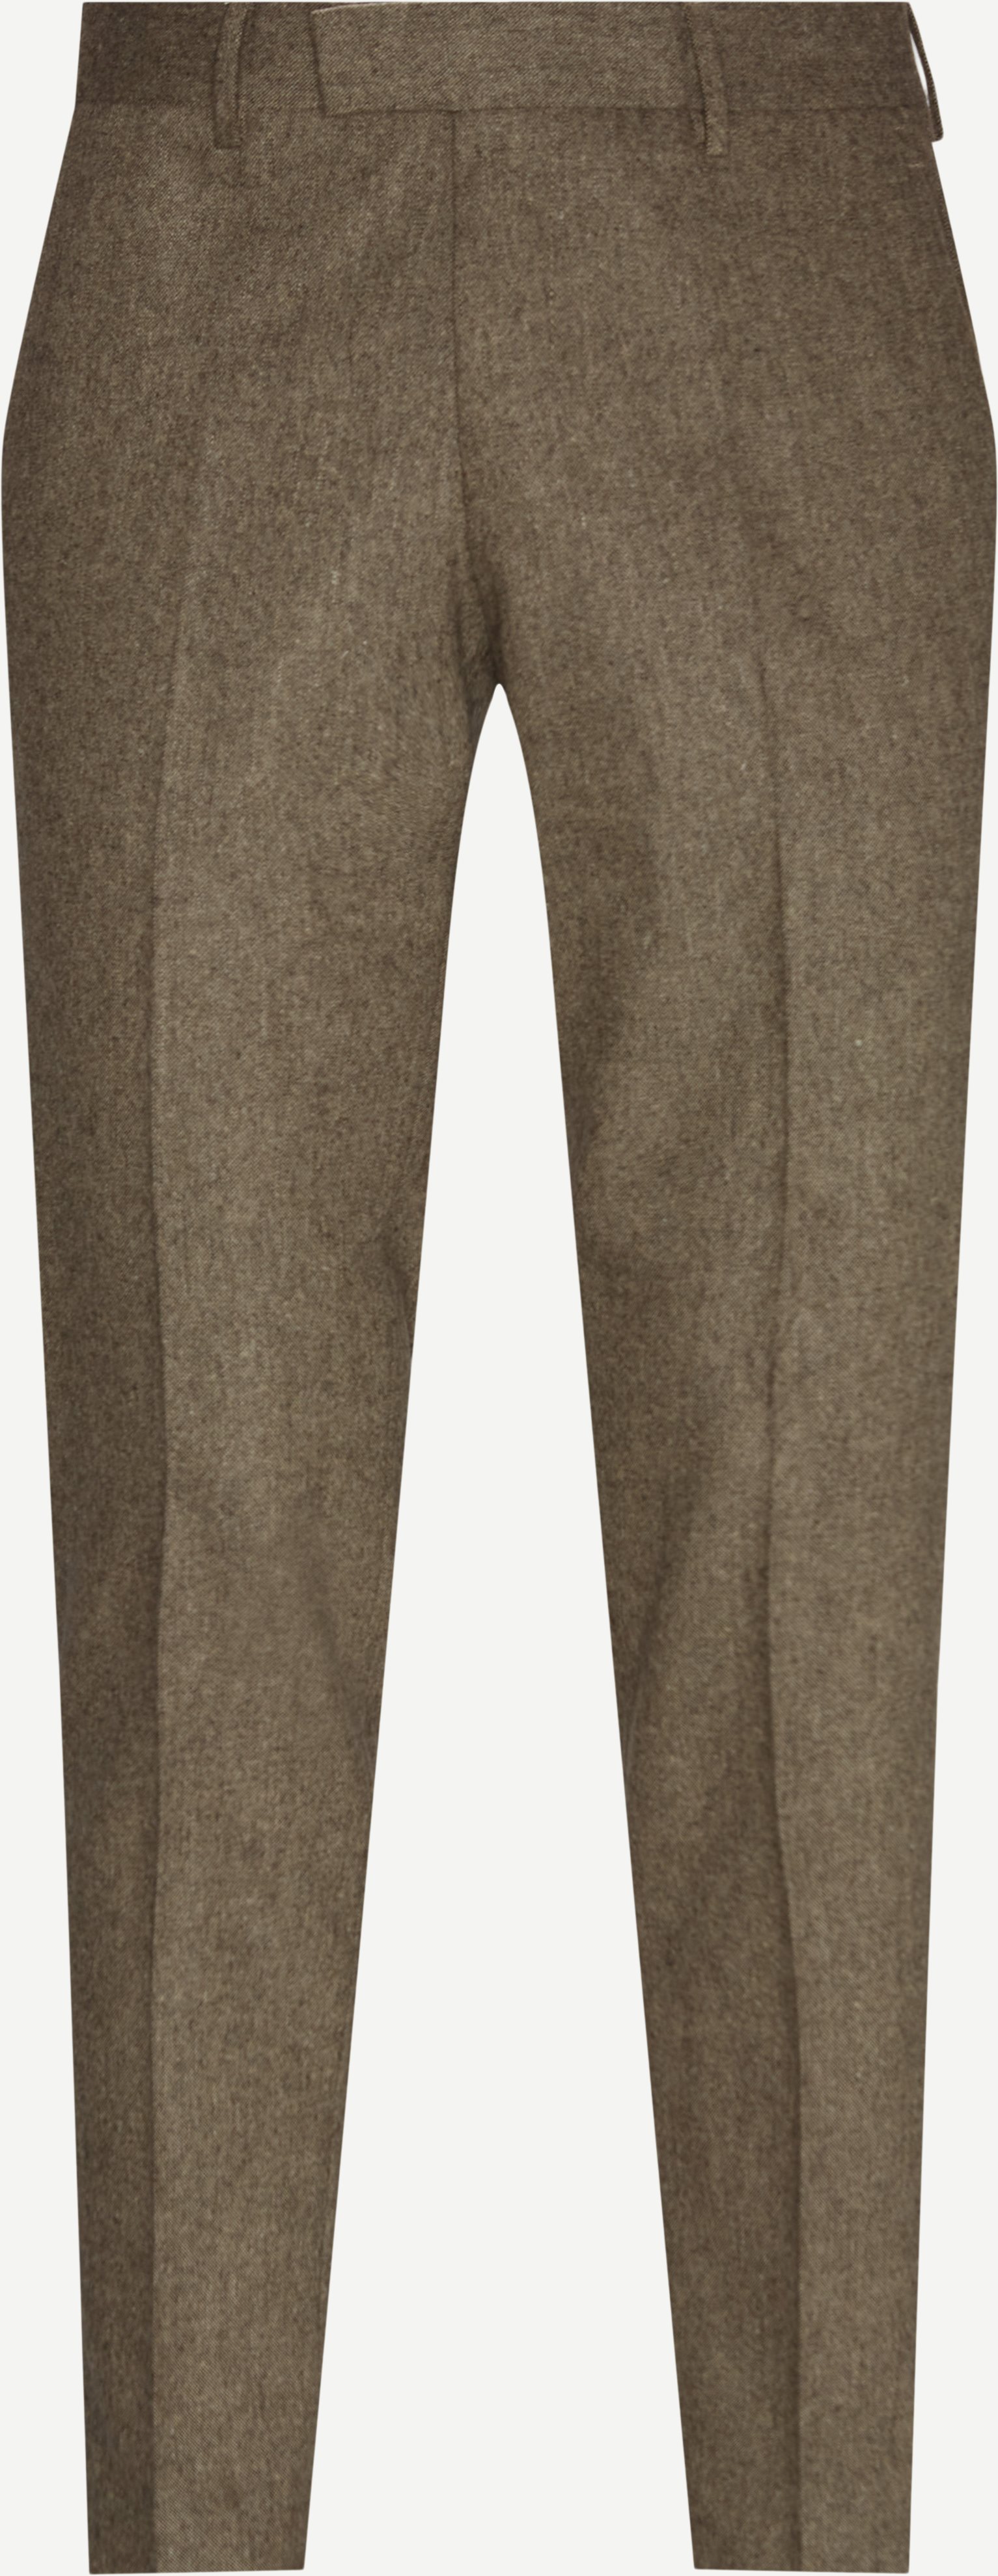 69406 Tordon Trousers - Trousers - Regular fit - Brown